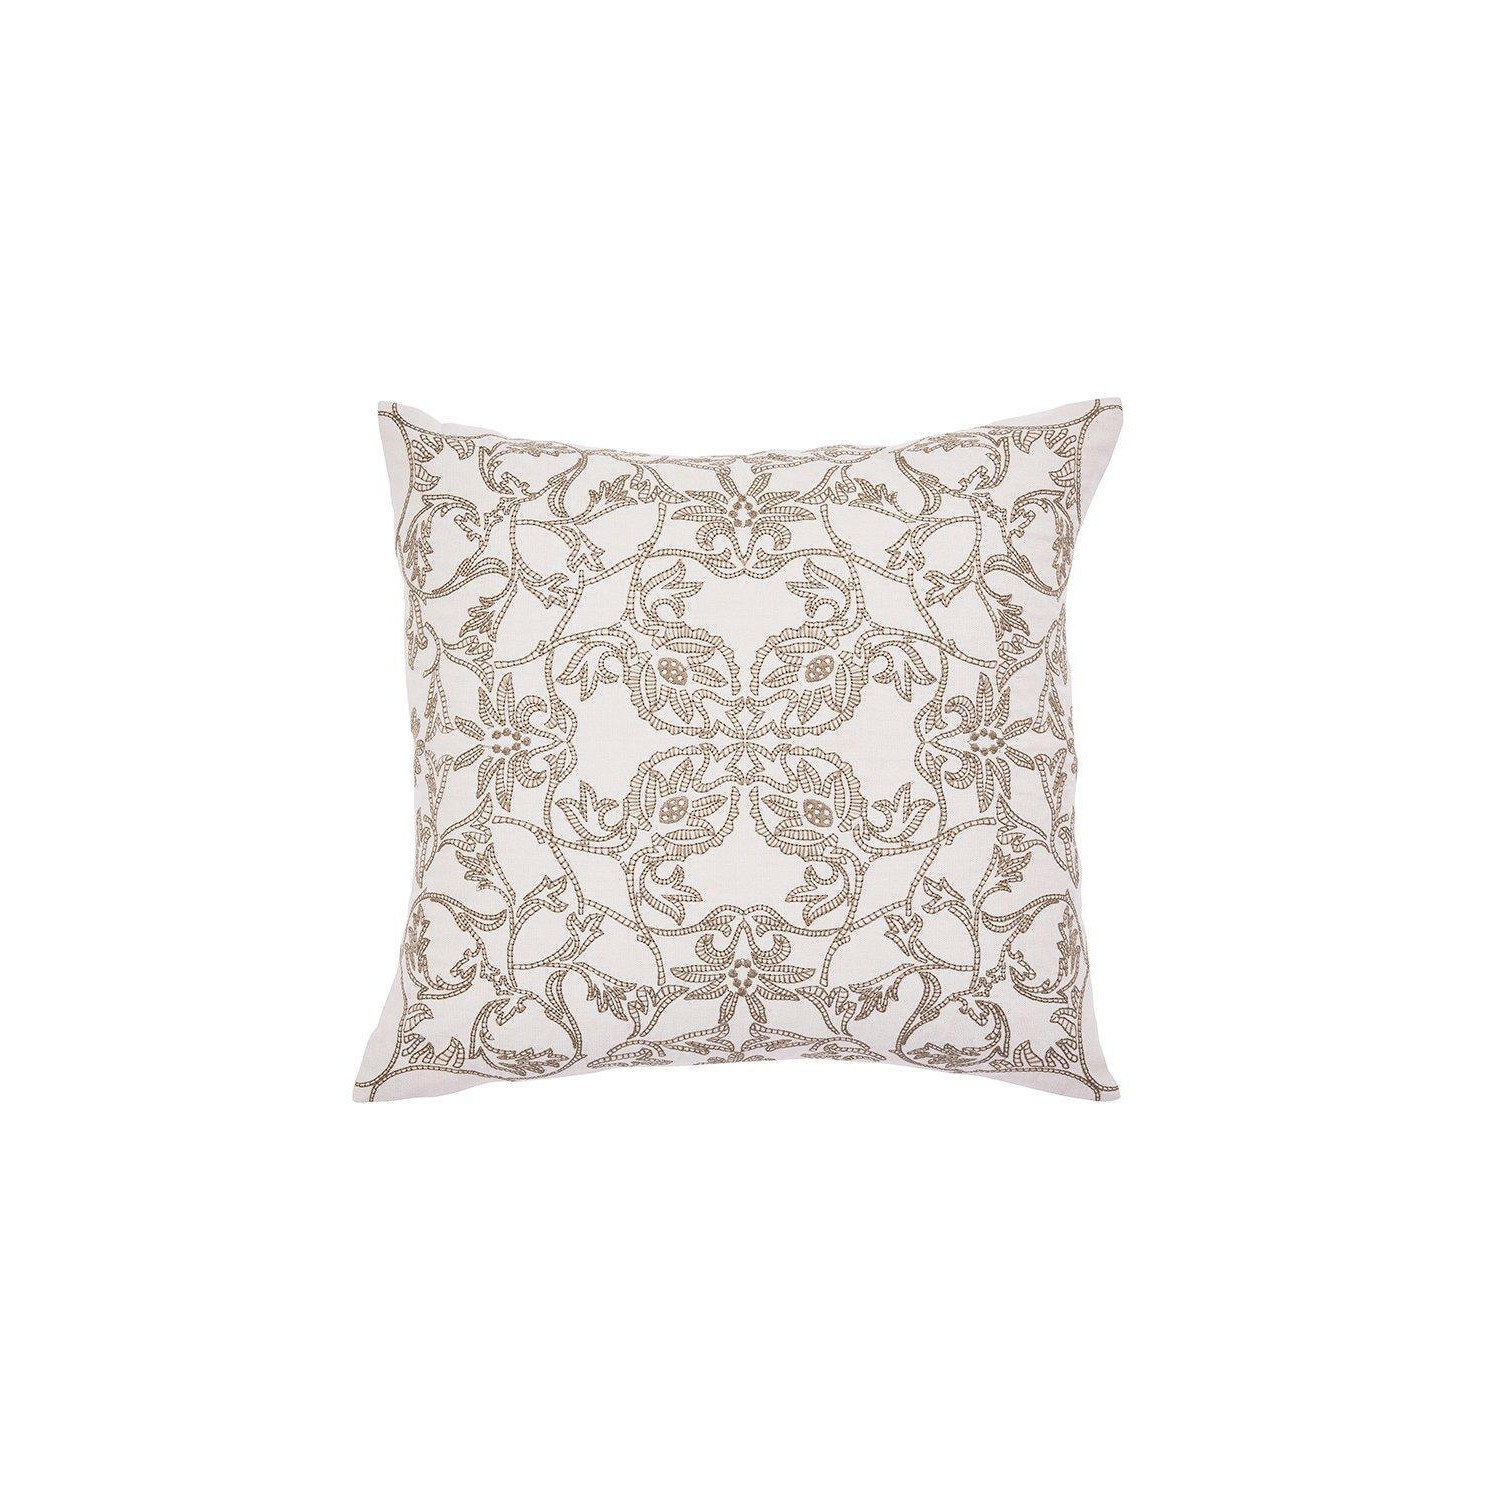 'Lodden' Cotton Cushion - image 1